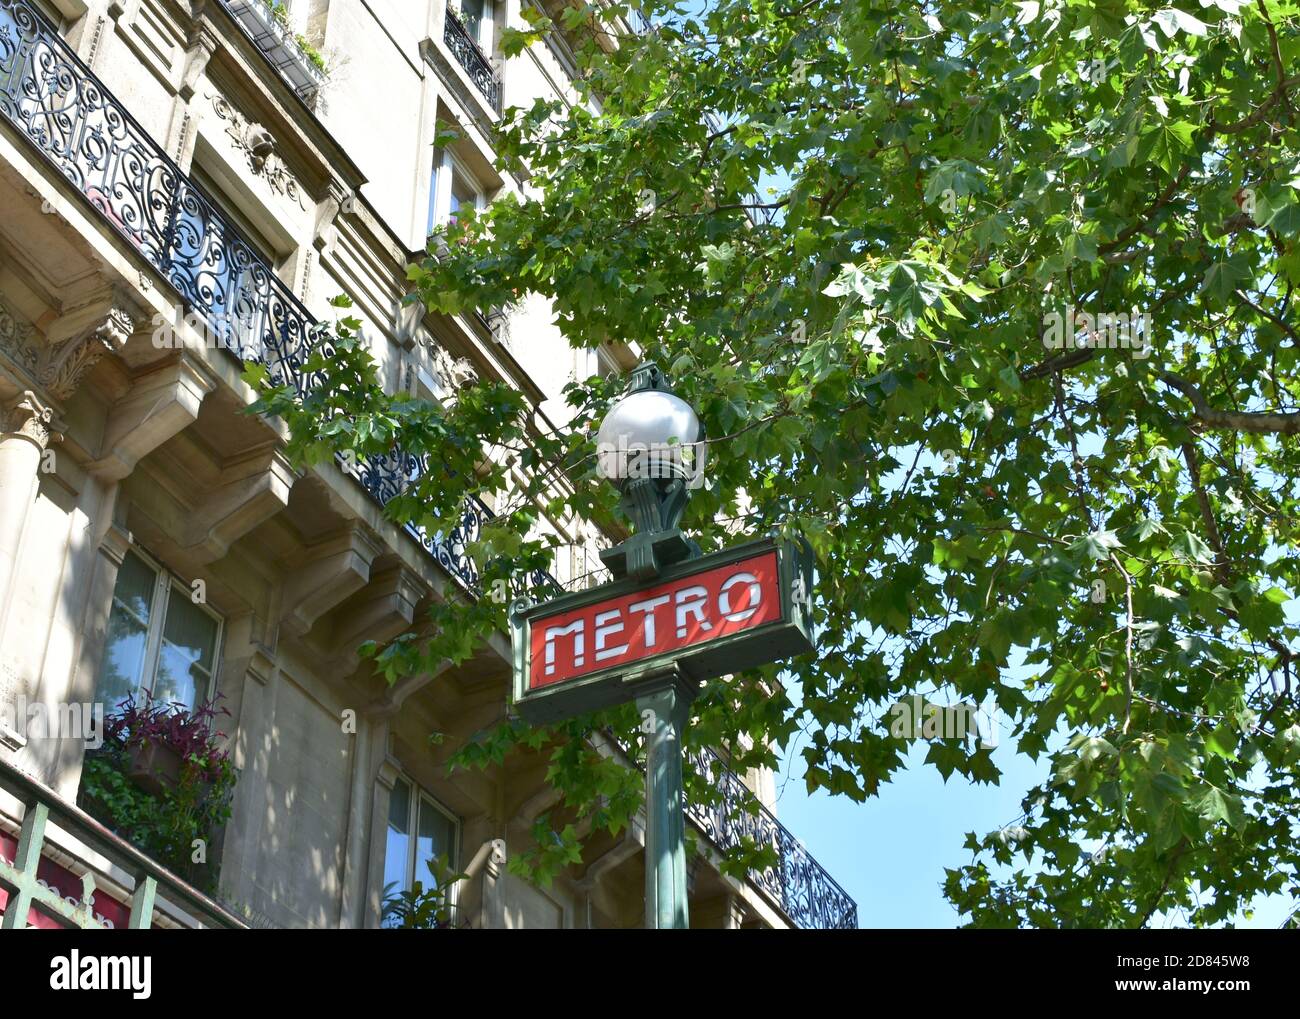 Parisian Metro sign at underground station. Paris, France. Stock Photo